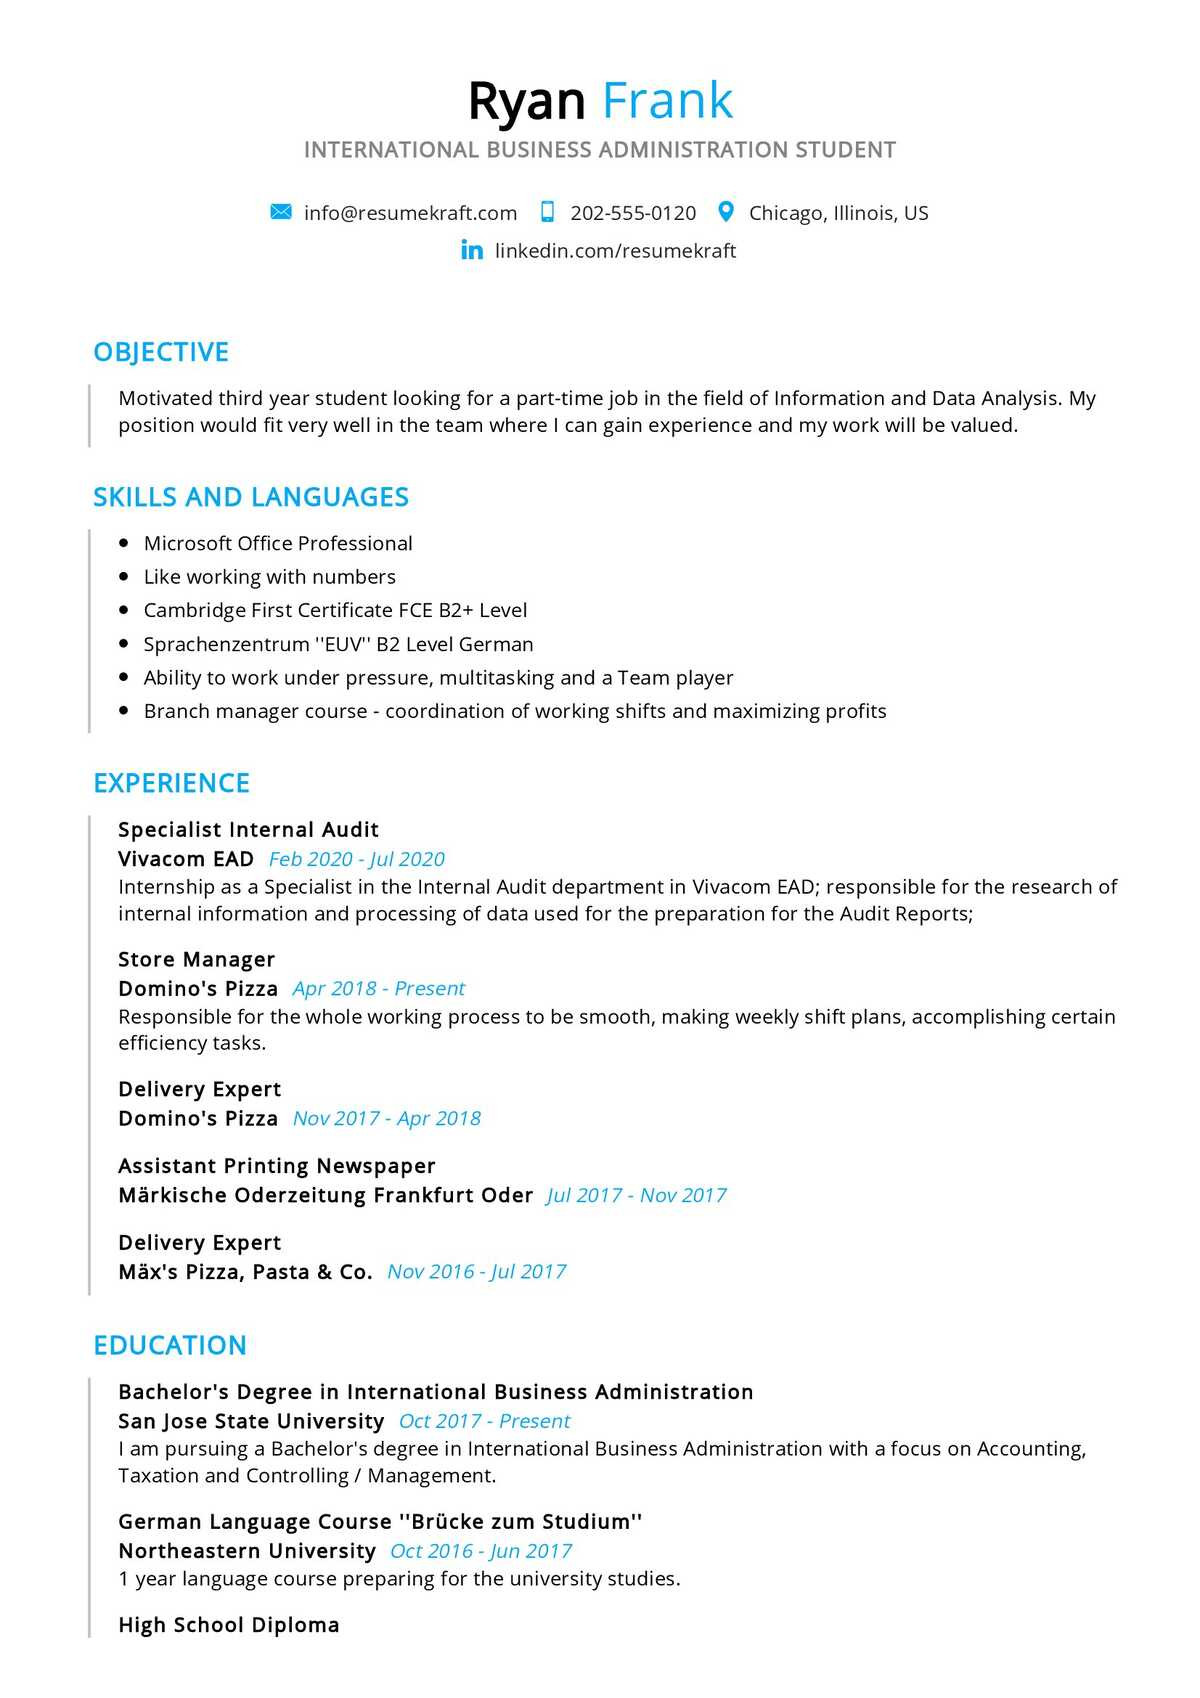 Resume for Professional Writing Major Samples Business Student Resume Sample 2022 Writing Tips – Resumekraft